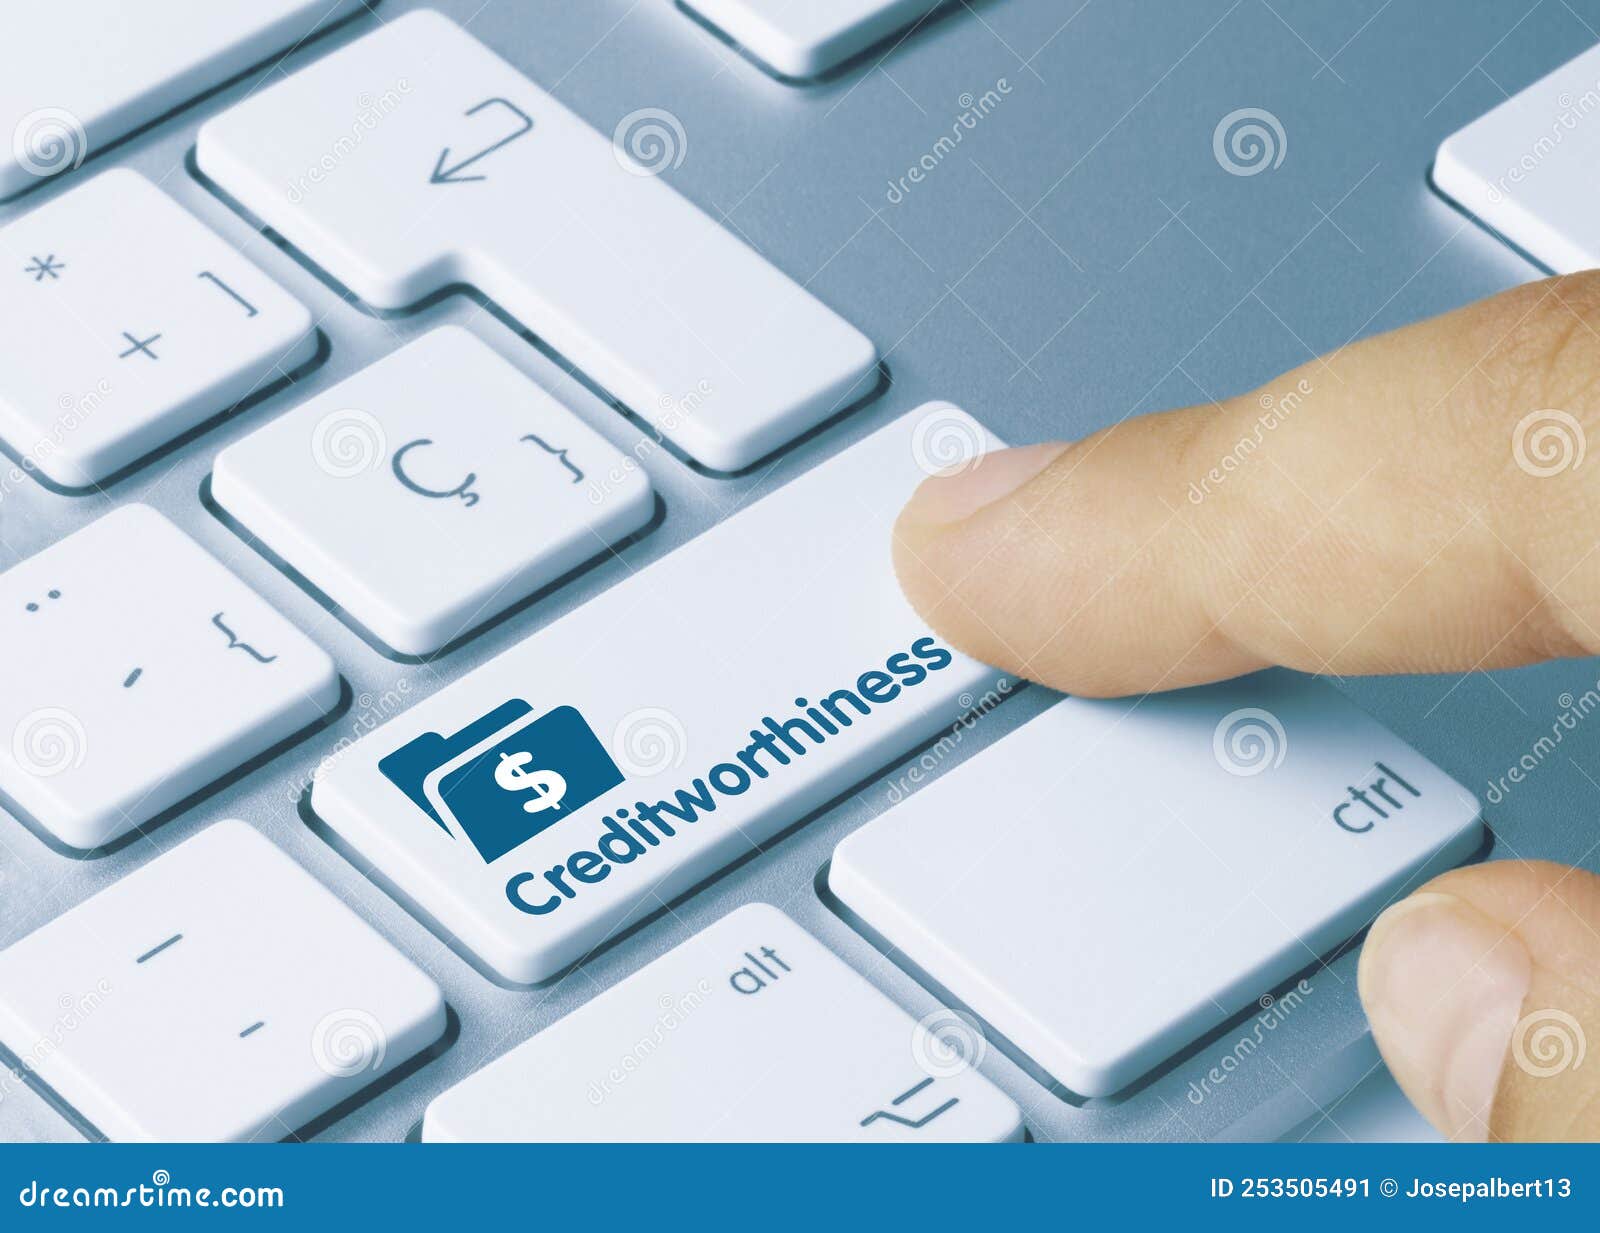 creditworthiness - inscription on blue keyboard key